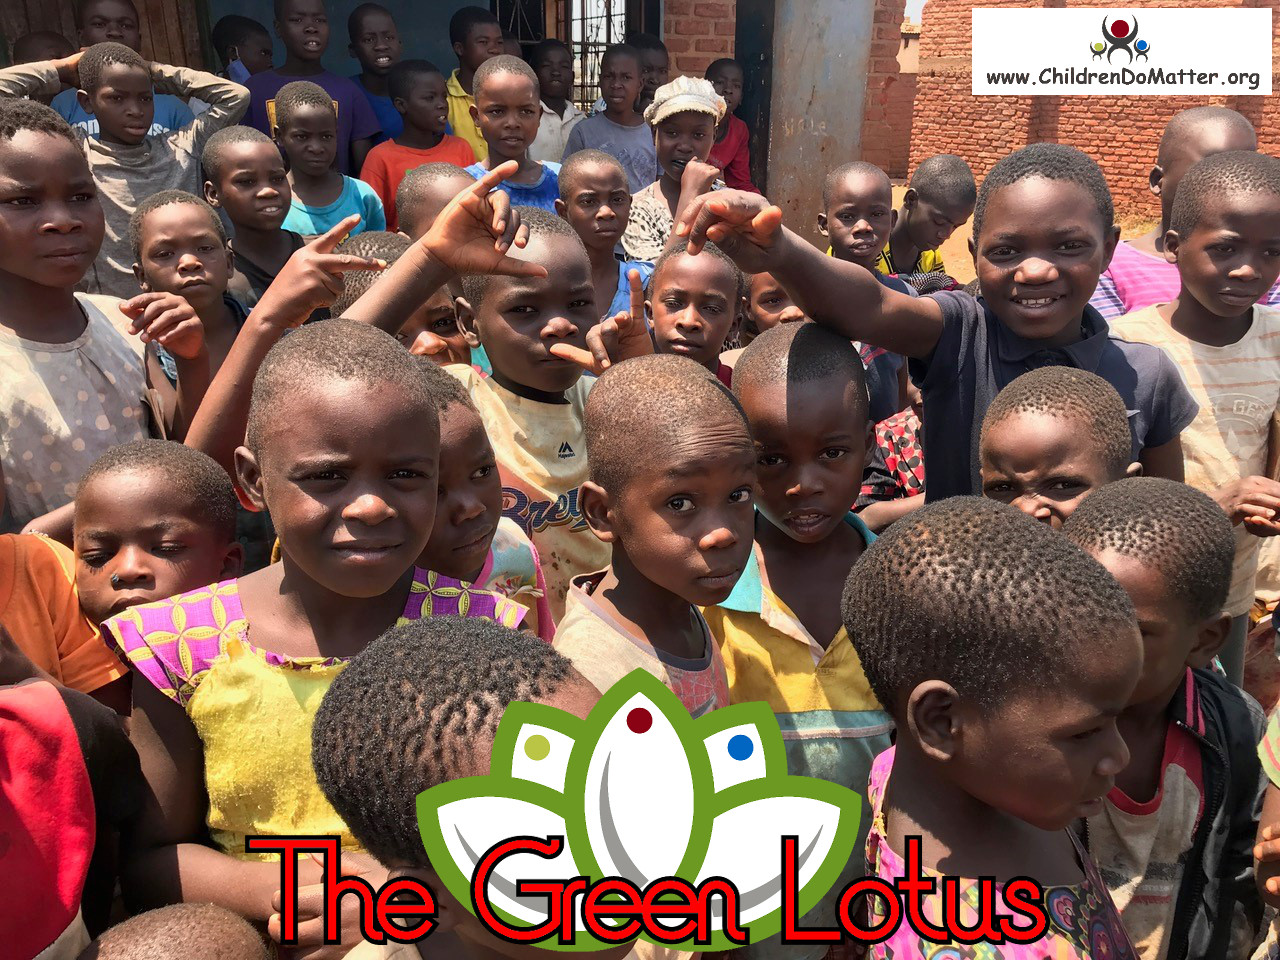 street children in malawi - the green lotus orphanage - children do matter